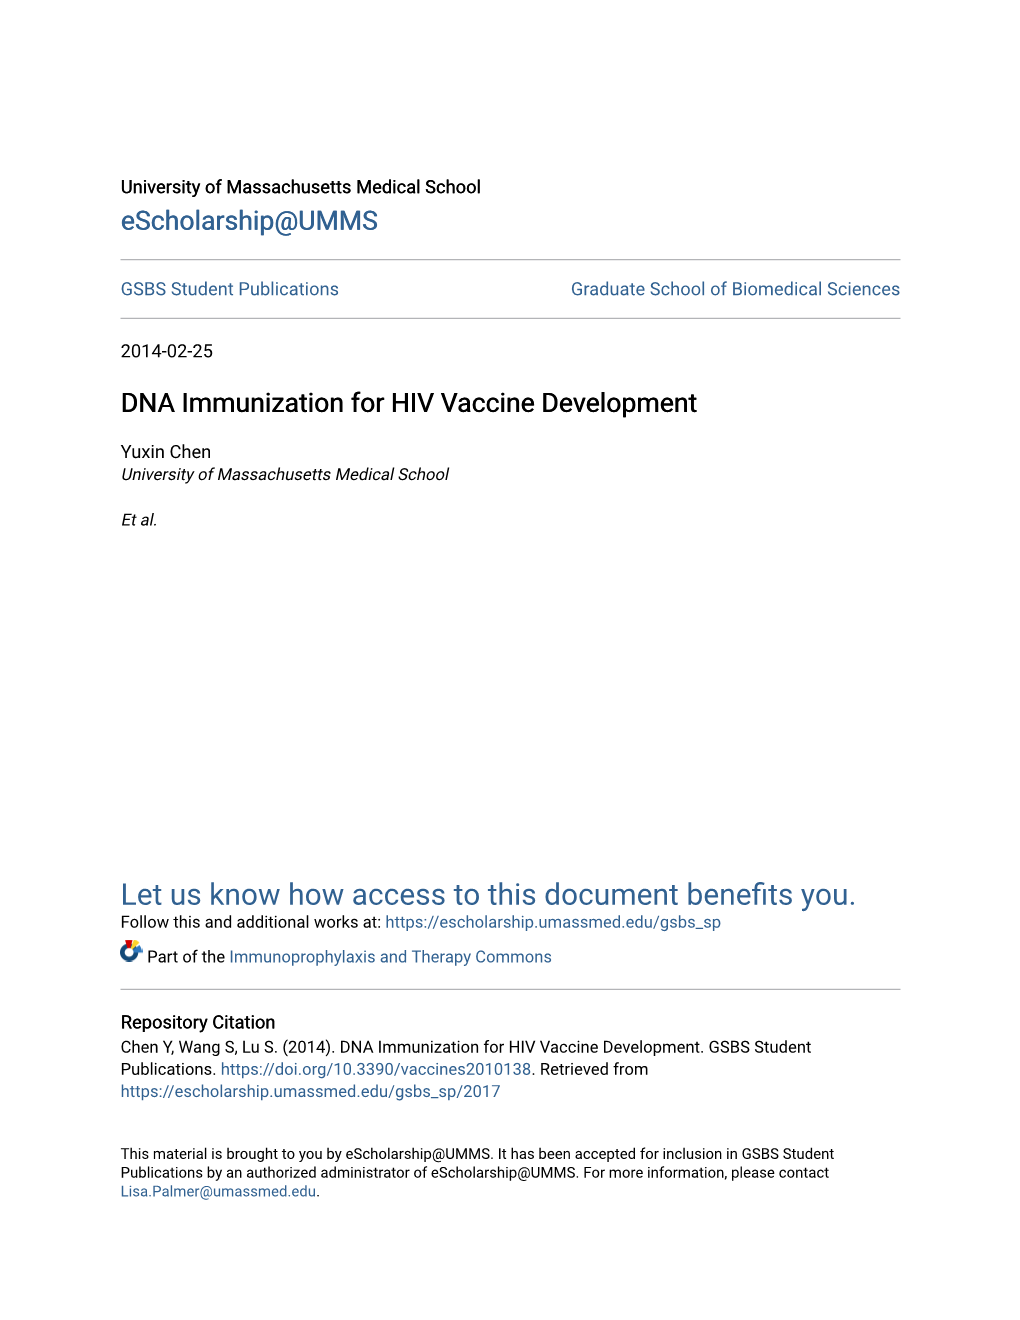 DNA Immunization for HIV Vaccine Development